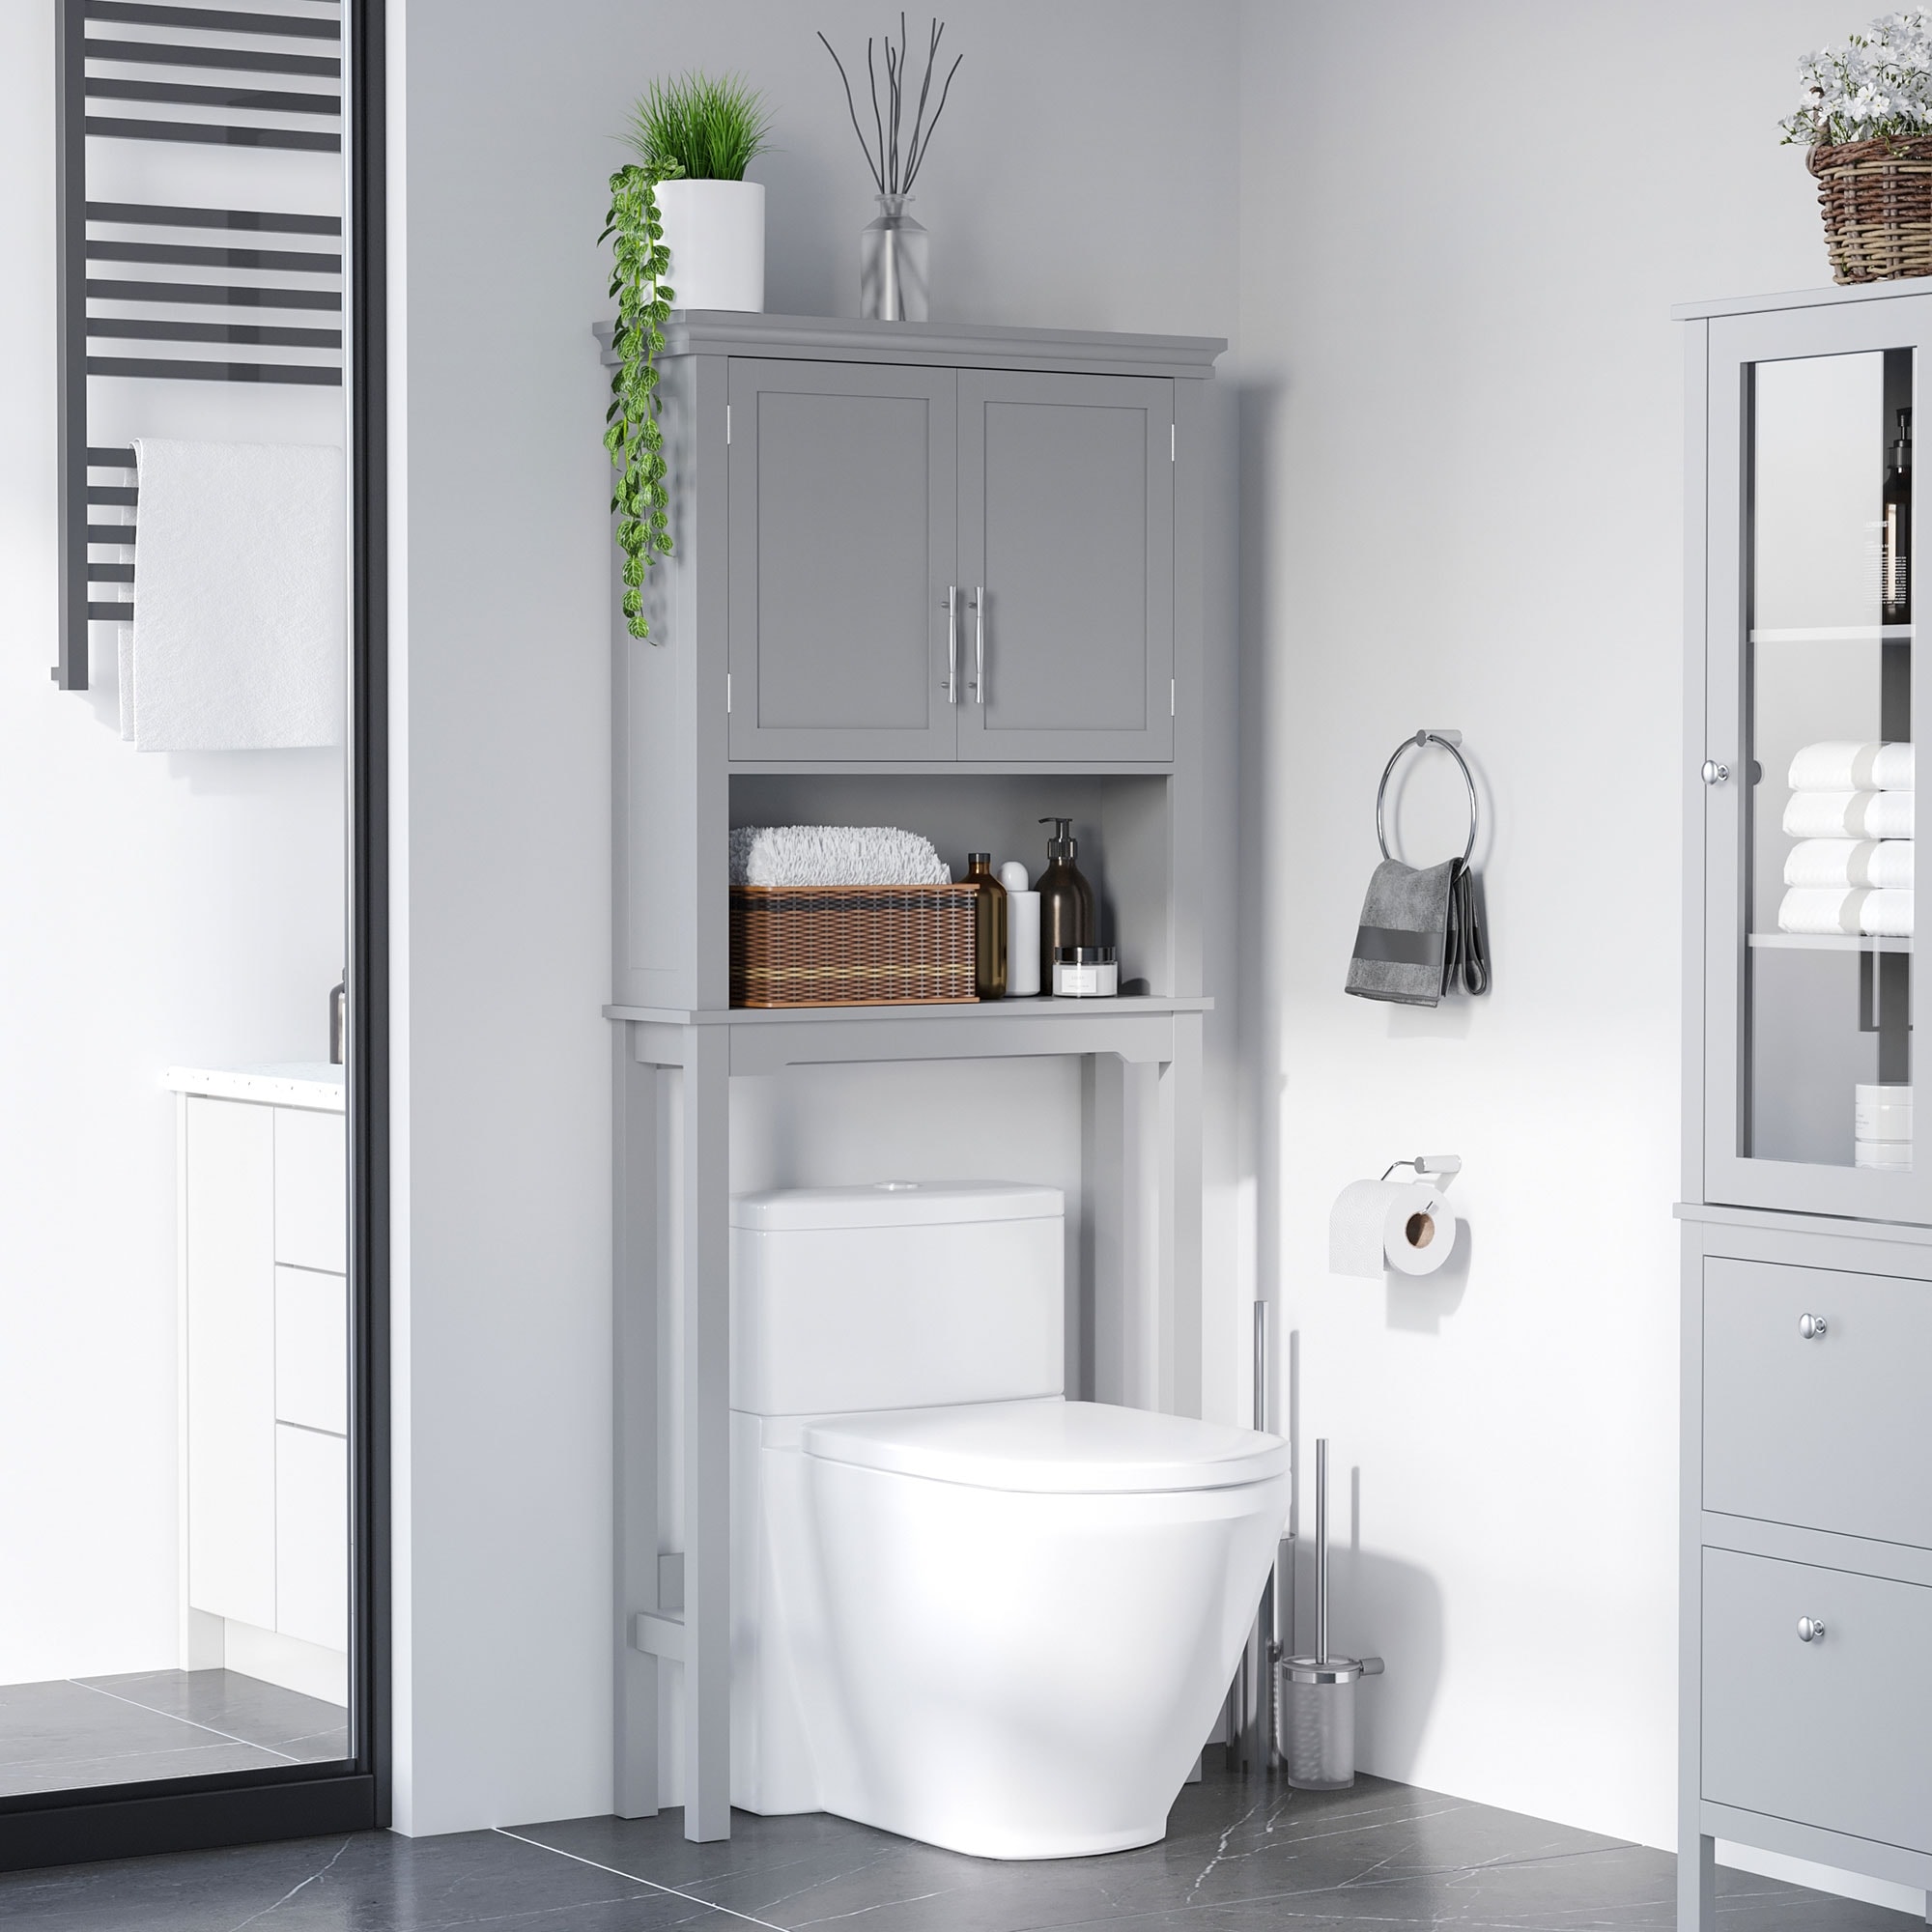 kleankin Modern Over The Toilet Storage Cabinet, Double Door Bathroom Organizer with Inner Adjustable Shelf and Open Shelf, Grey